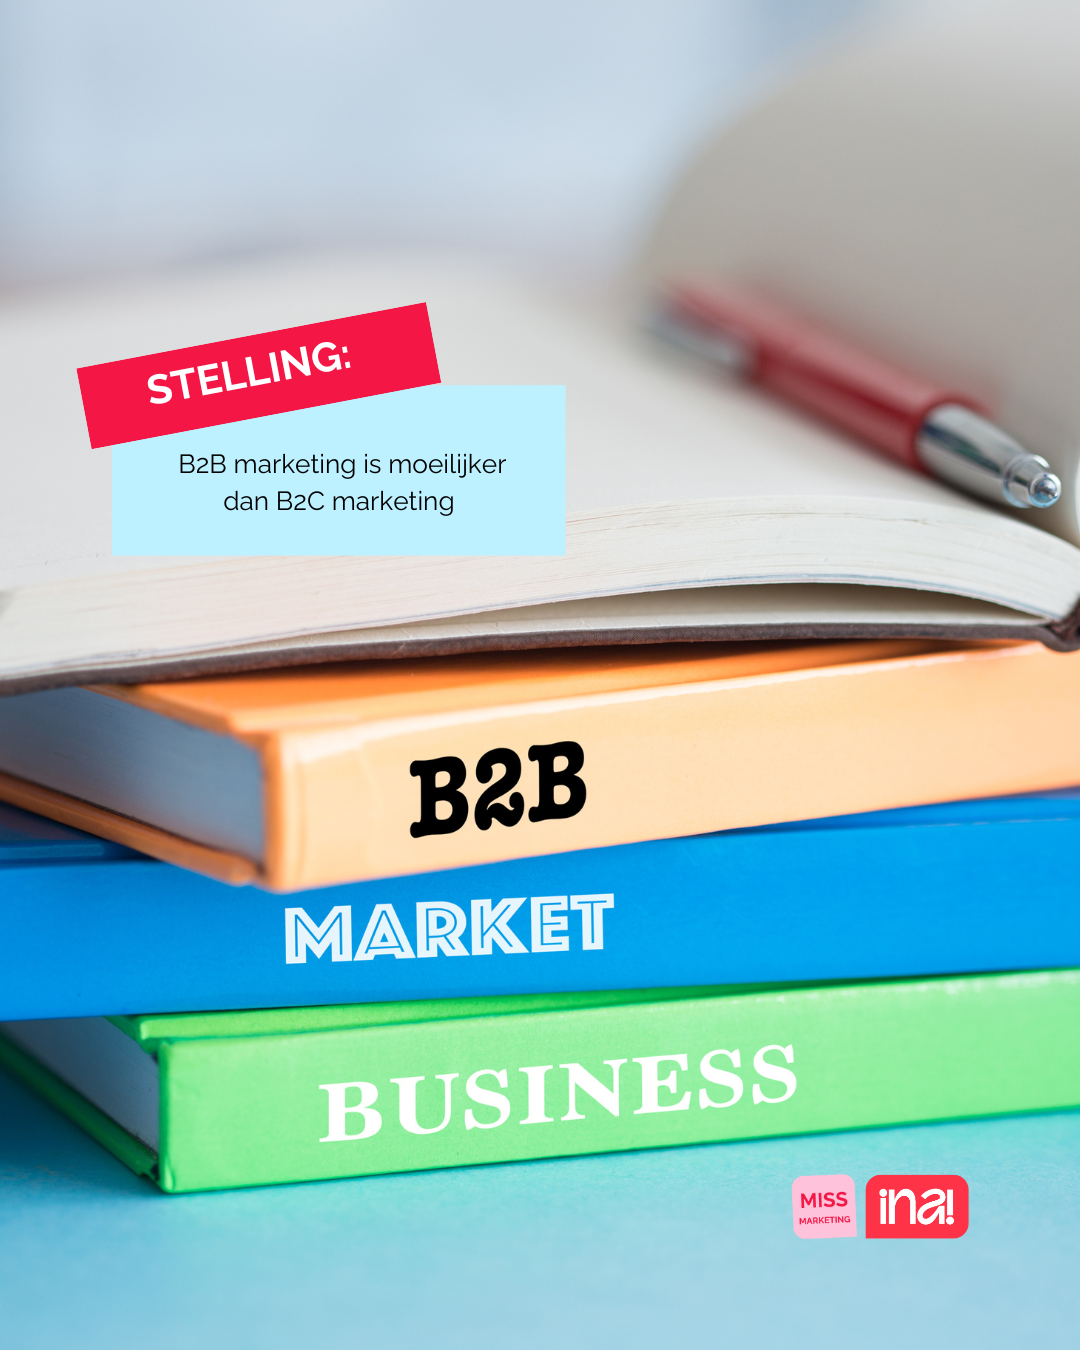 Stelling: 'B2B marketing is moeilijker dan B2C'